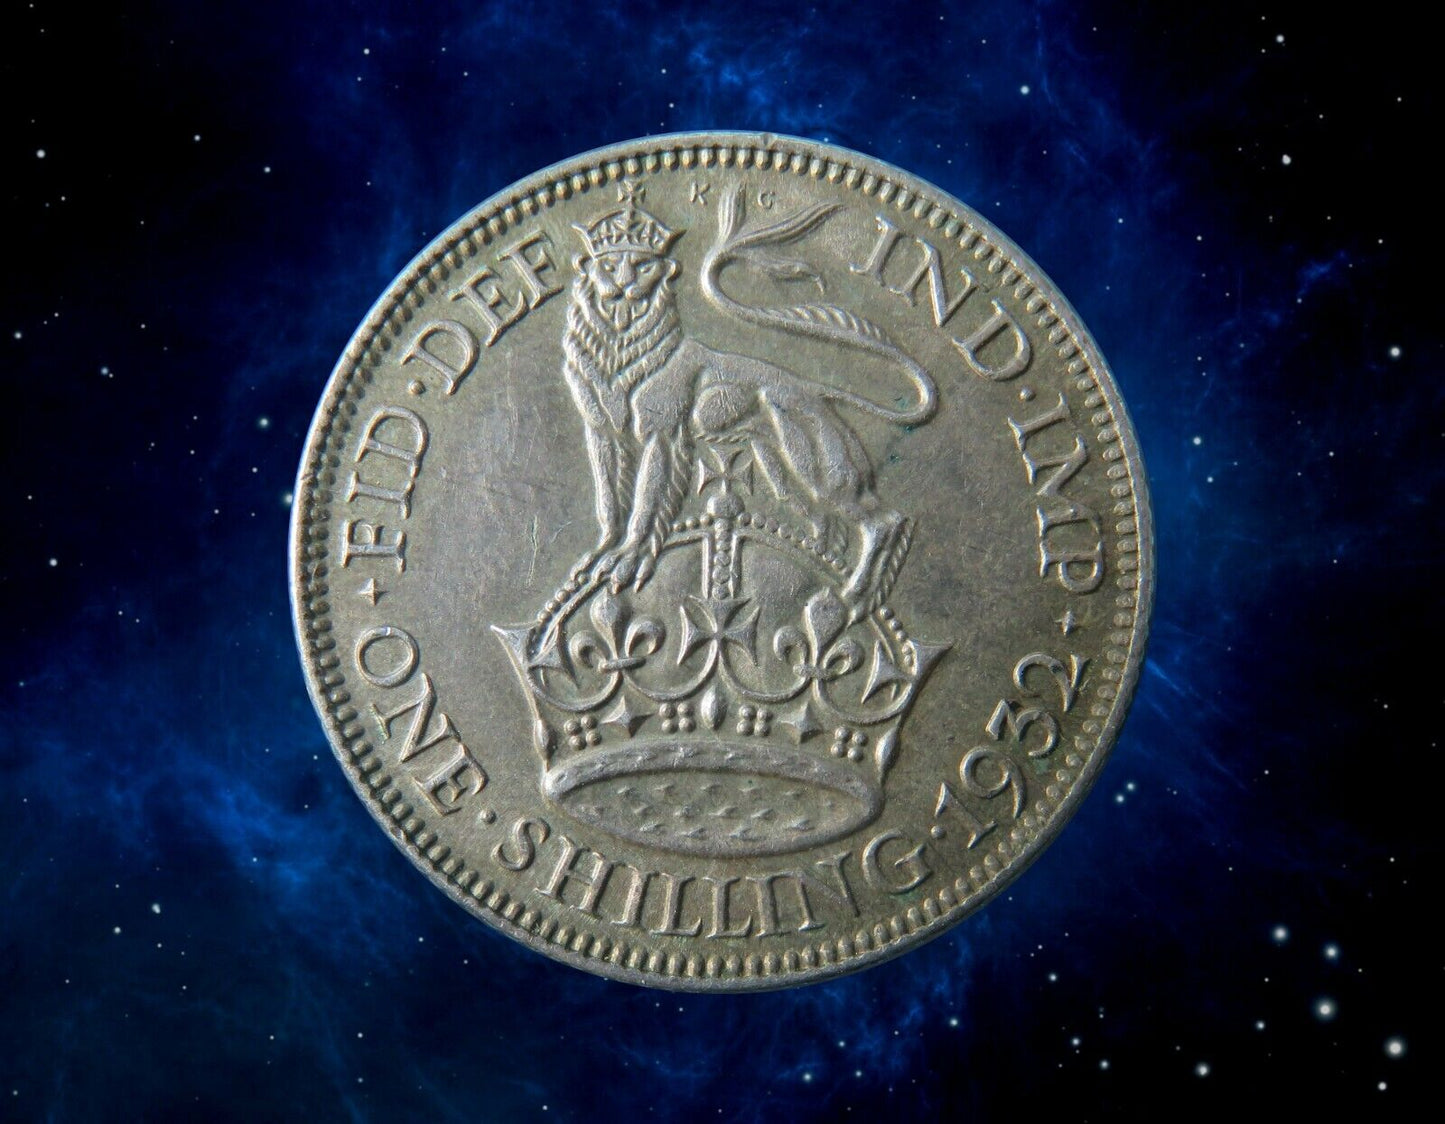 ROYAUME UNI - UNITED KINGDOM - Shilling 1932 S.4038